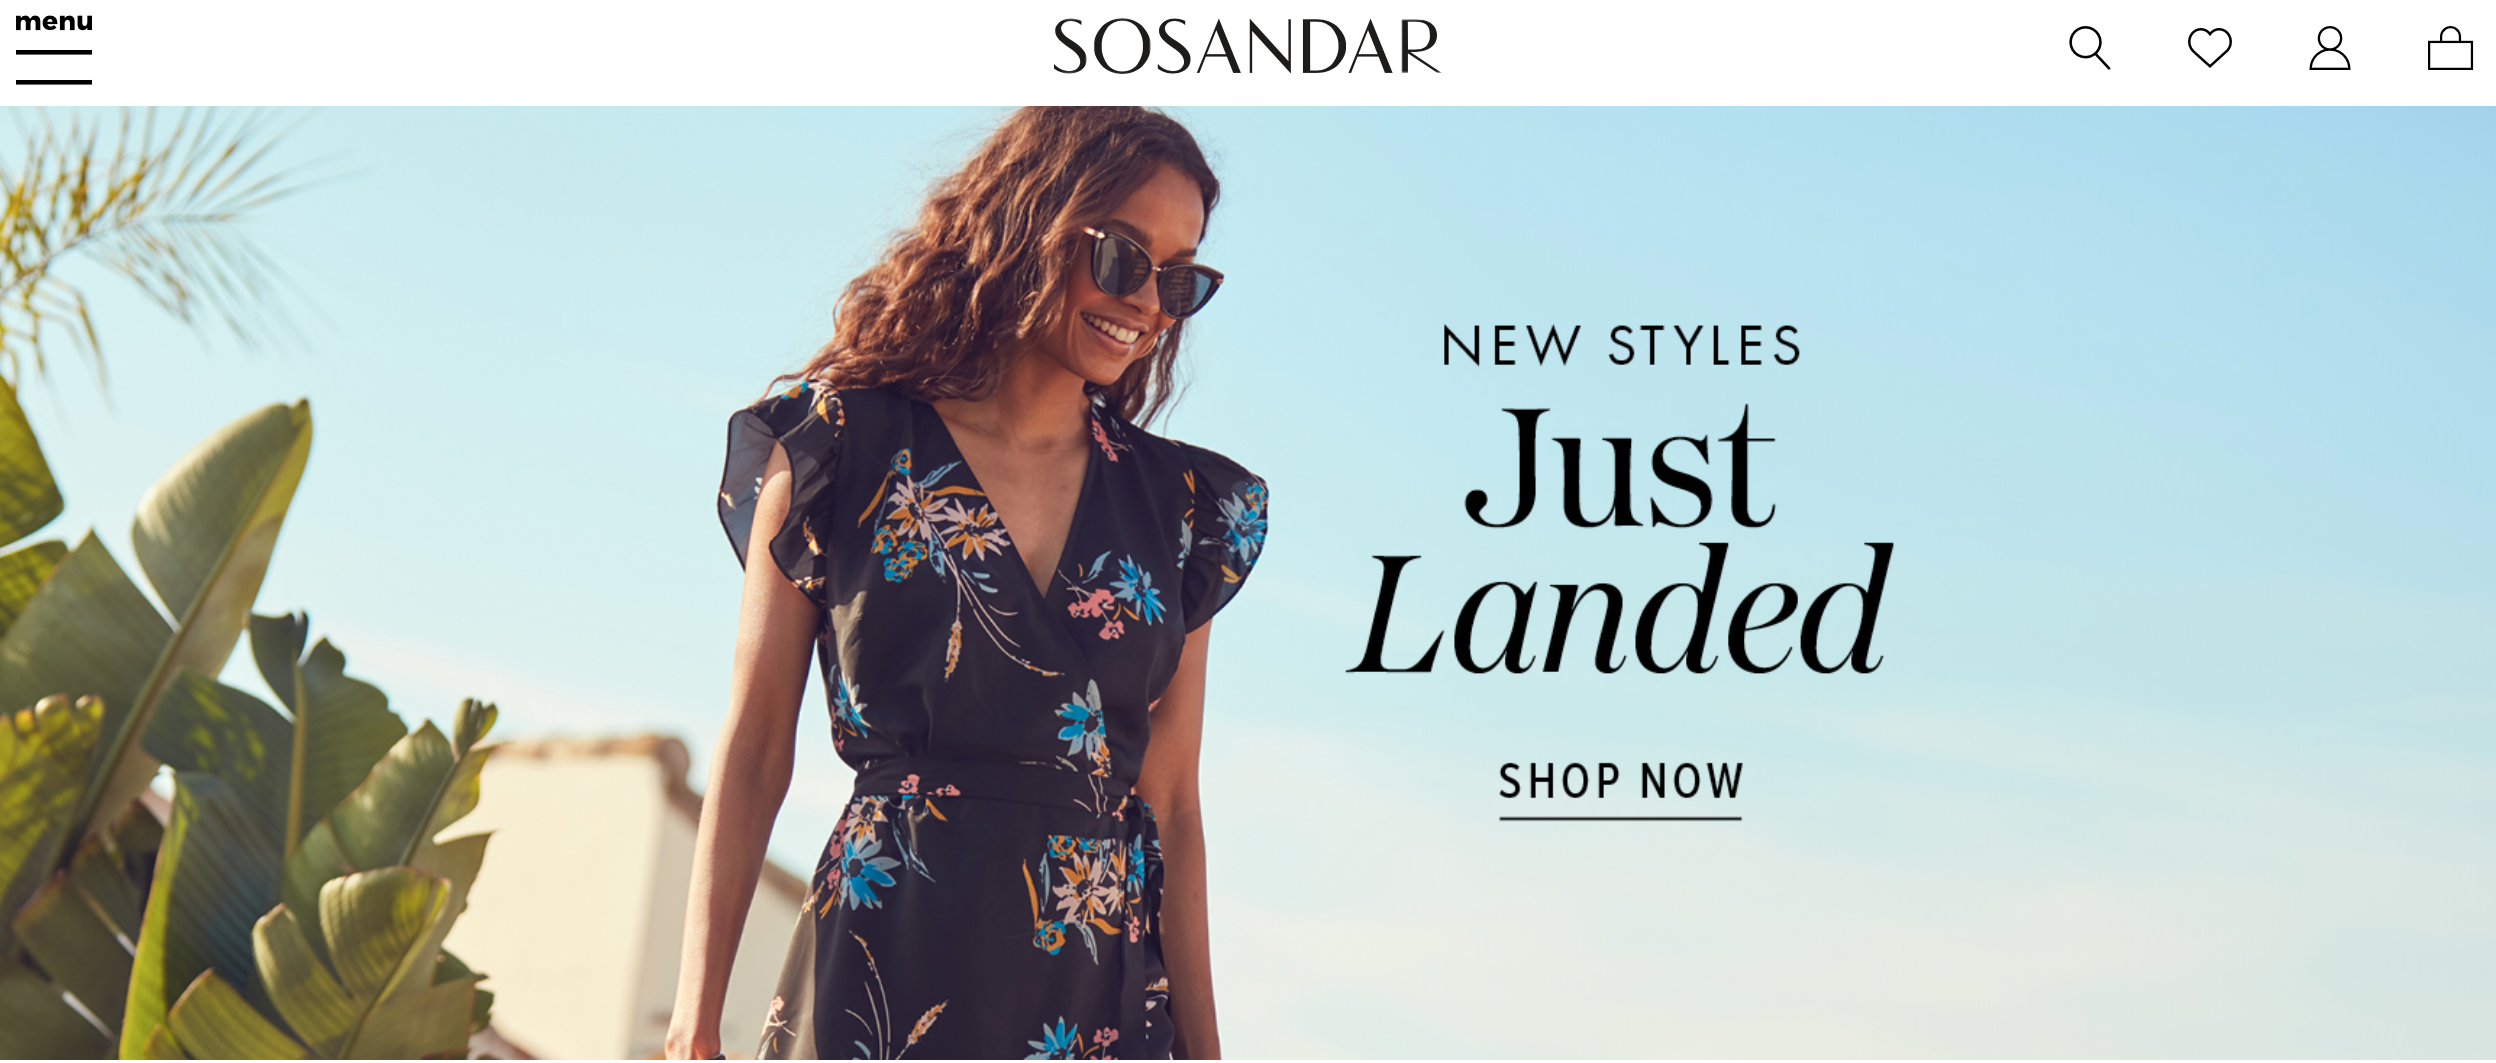 Sosandar posts strong sales and margin ...